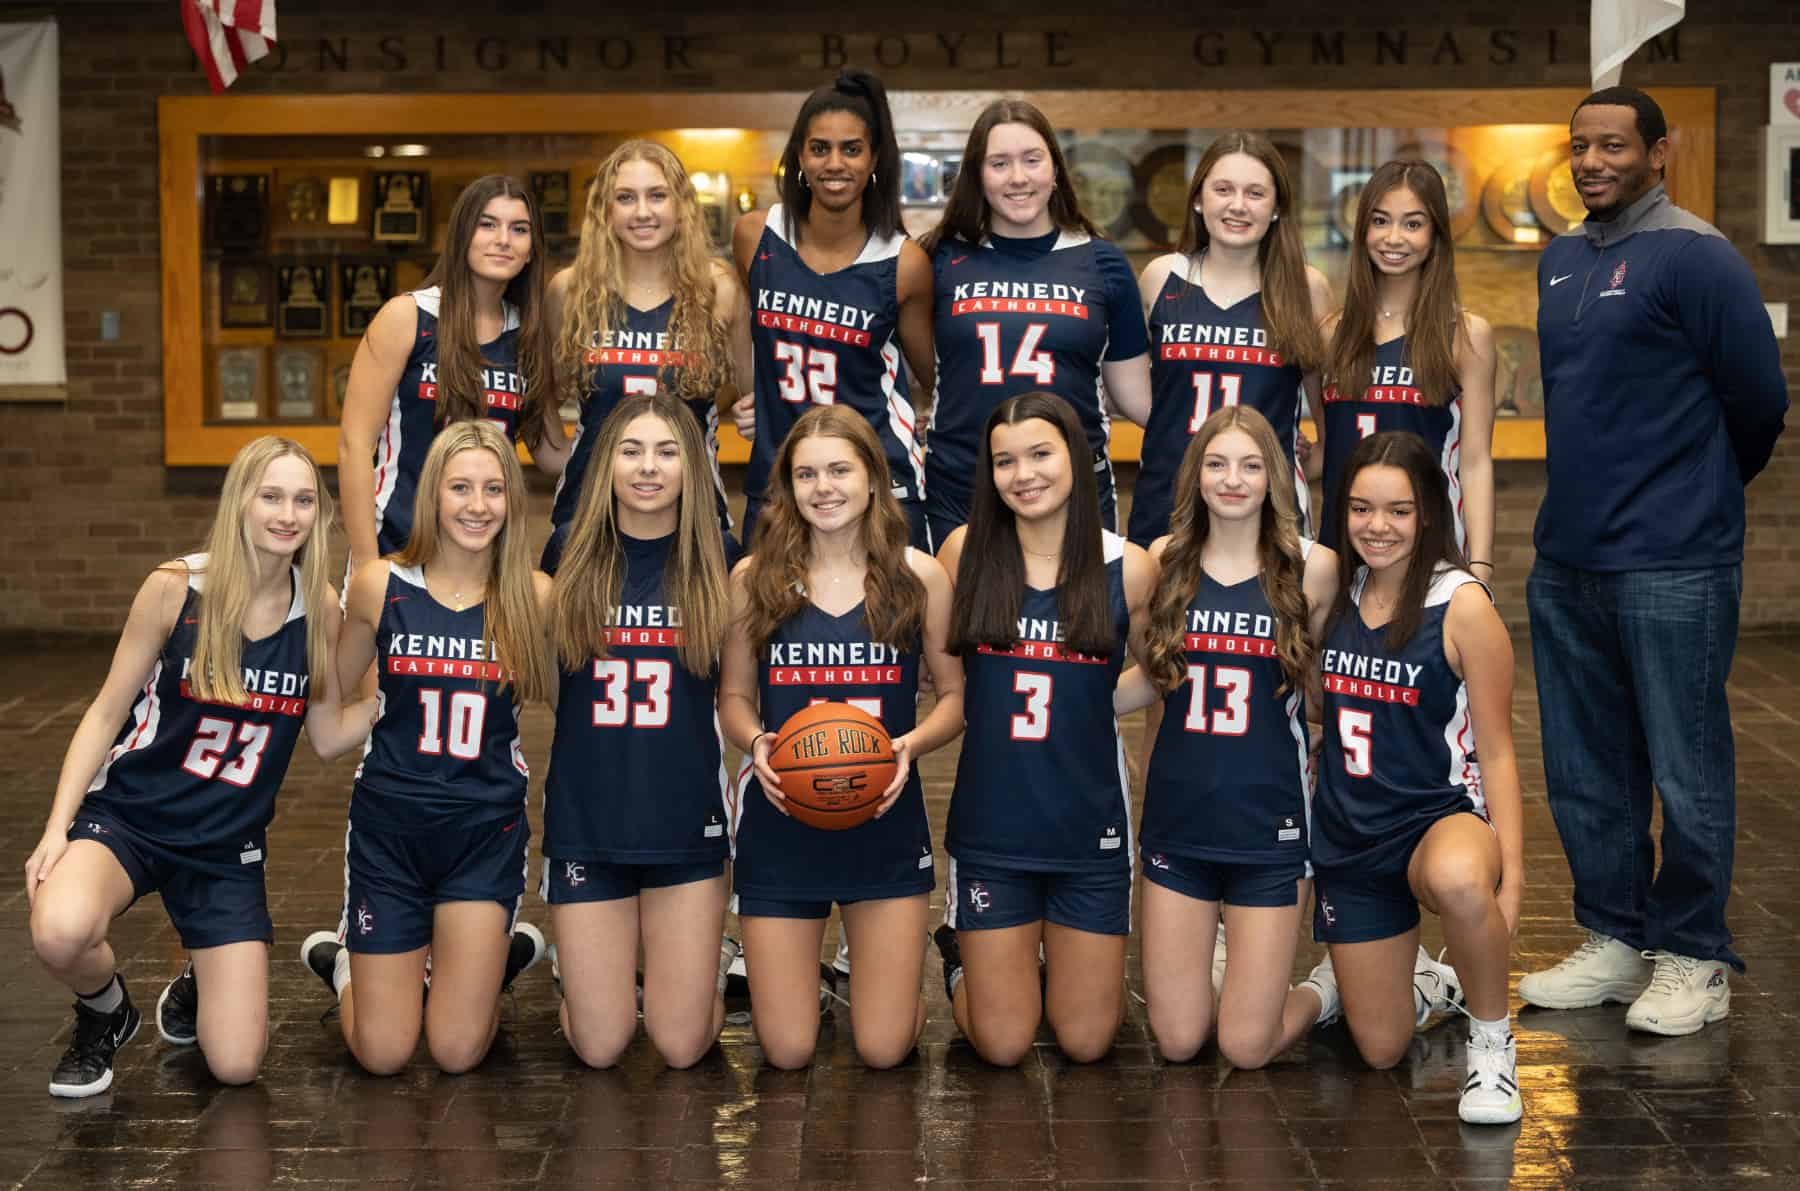 2021 Varsity Girls Basketball Team